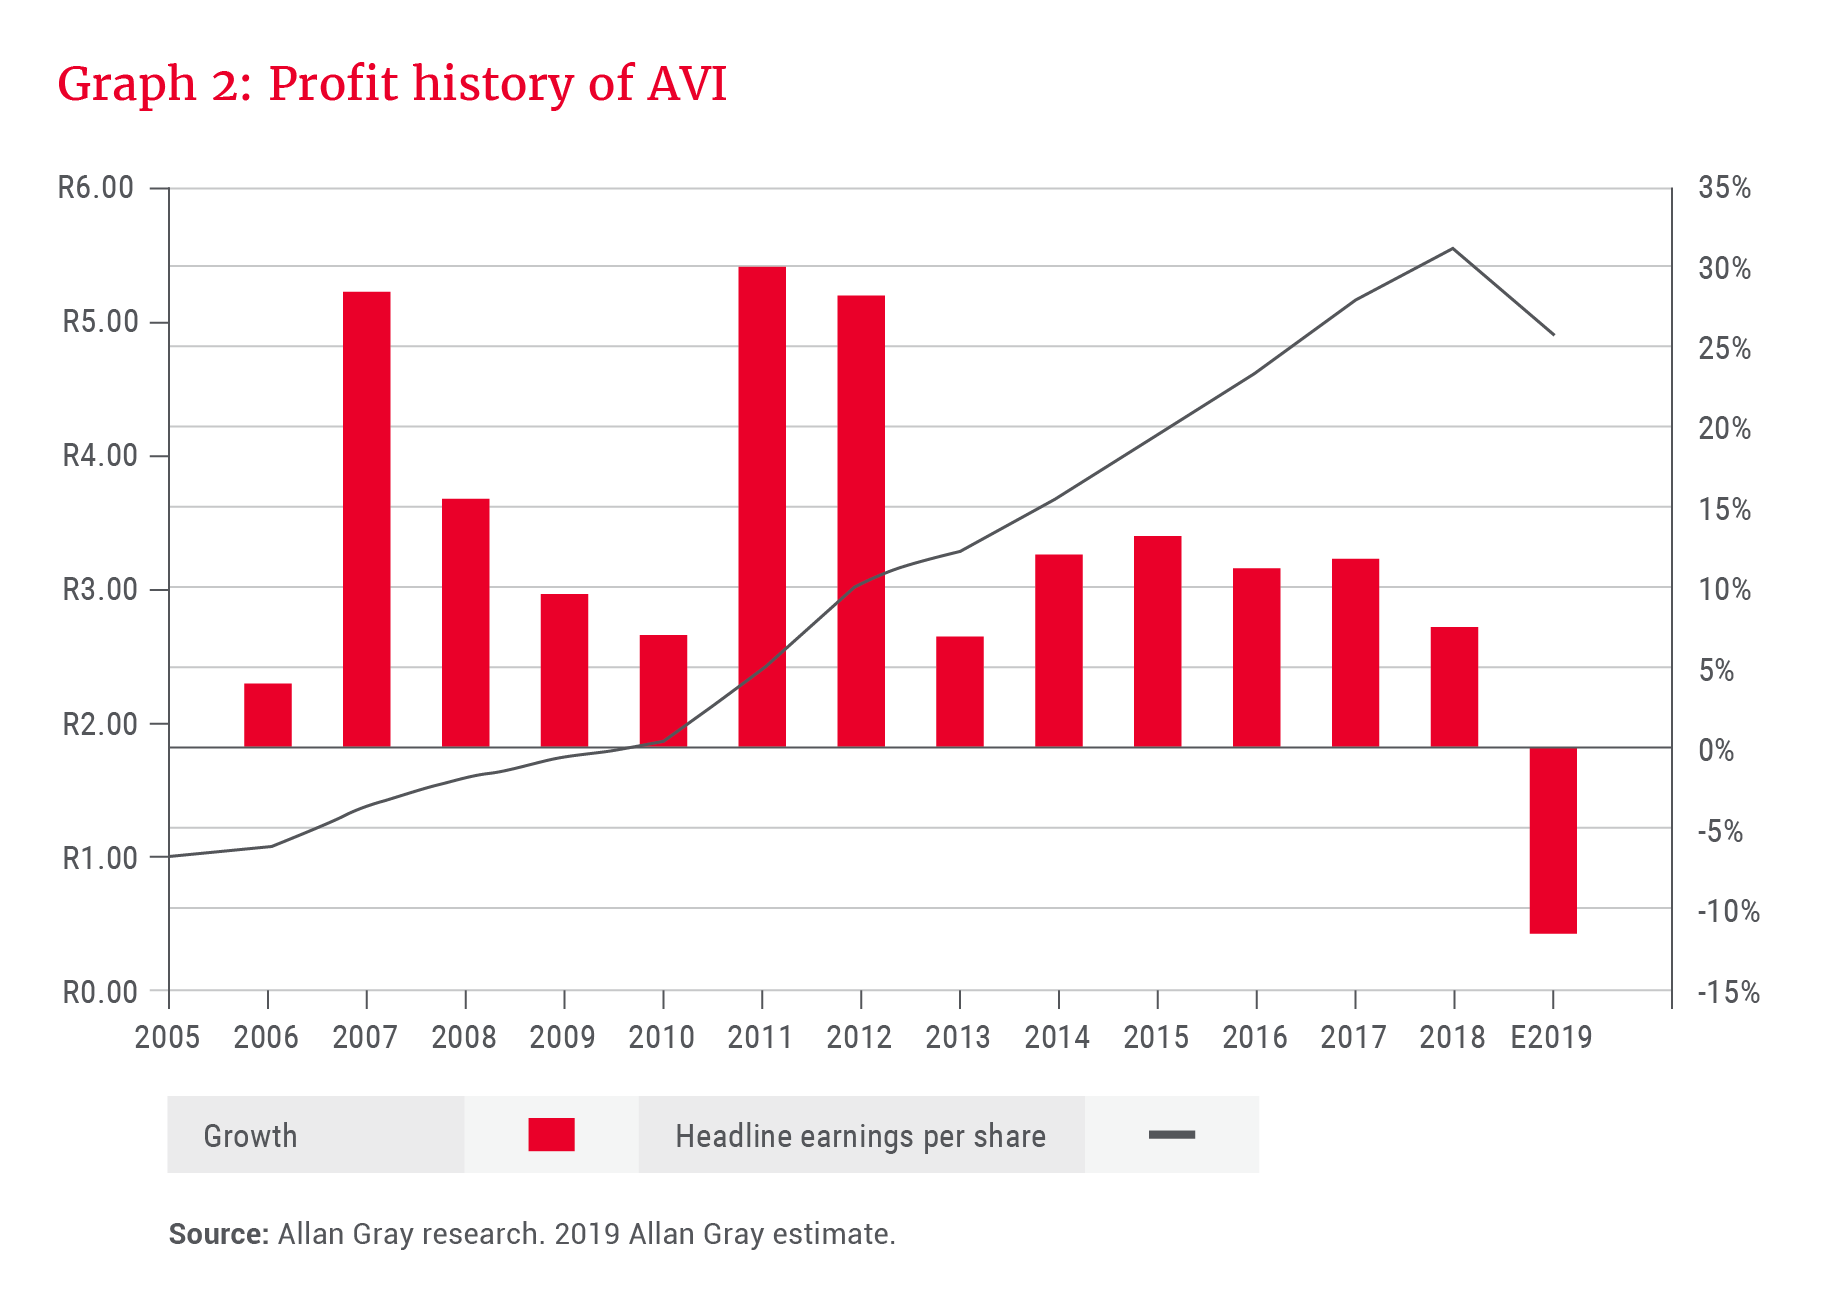 Profit history of AVI - Allan Gray